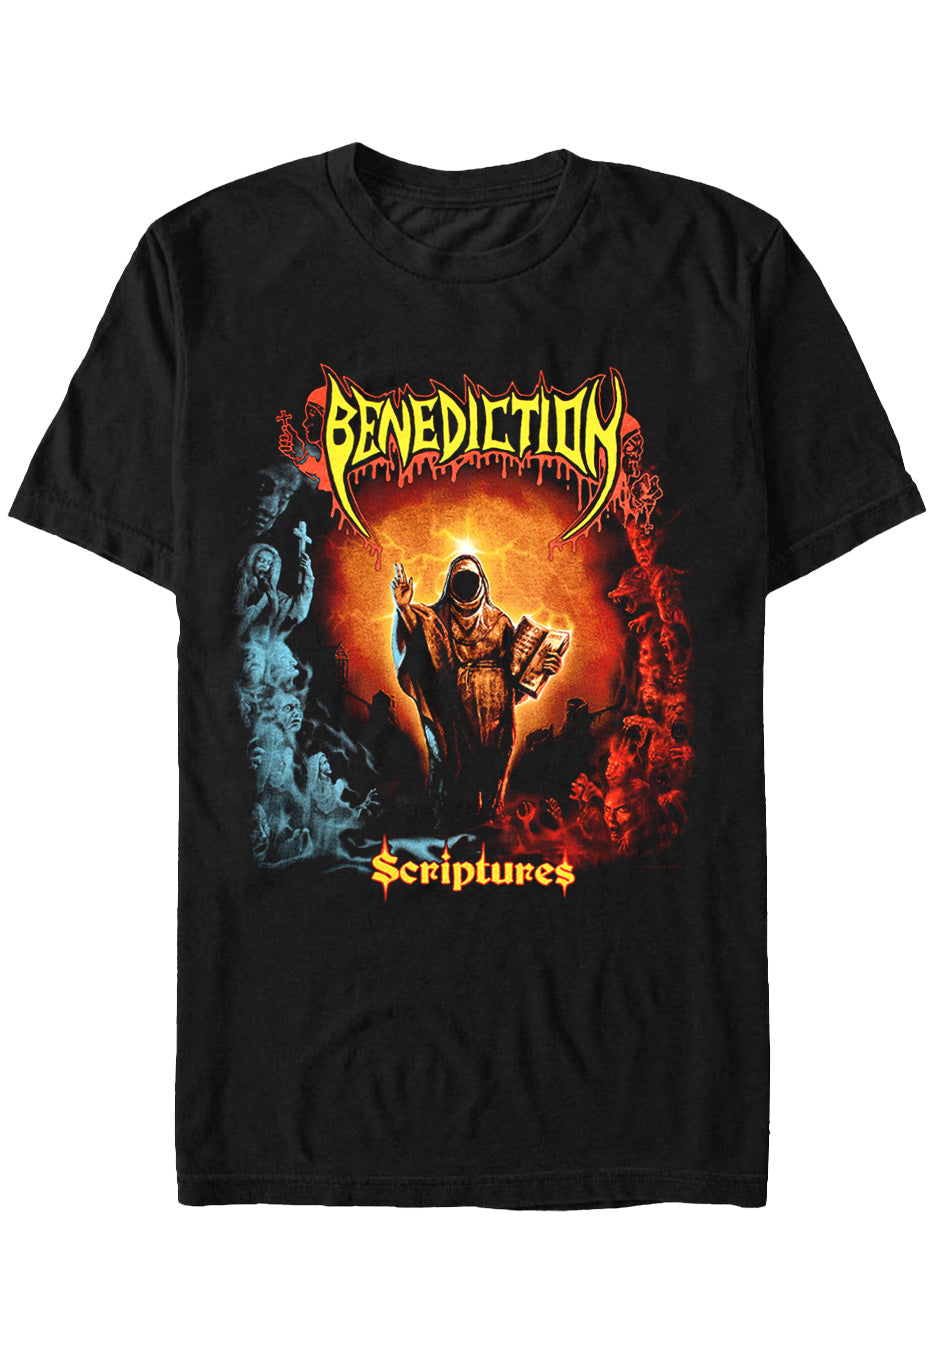 Benediction - Scriptures - T-Shirt